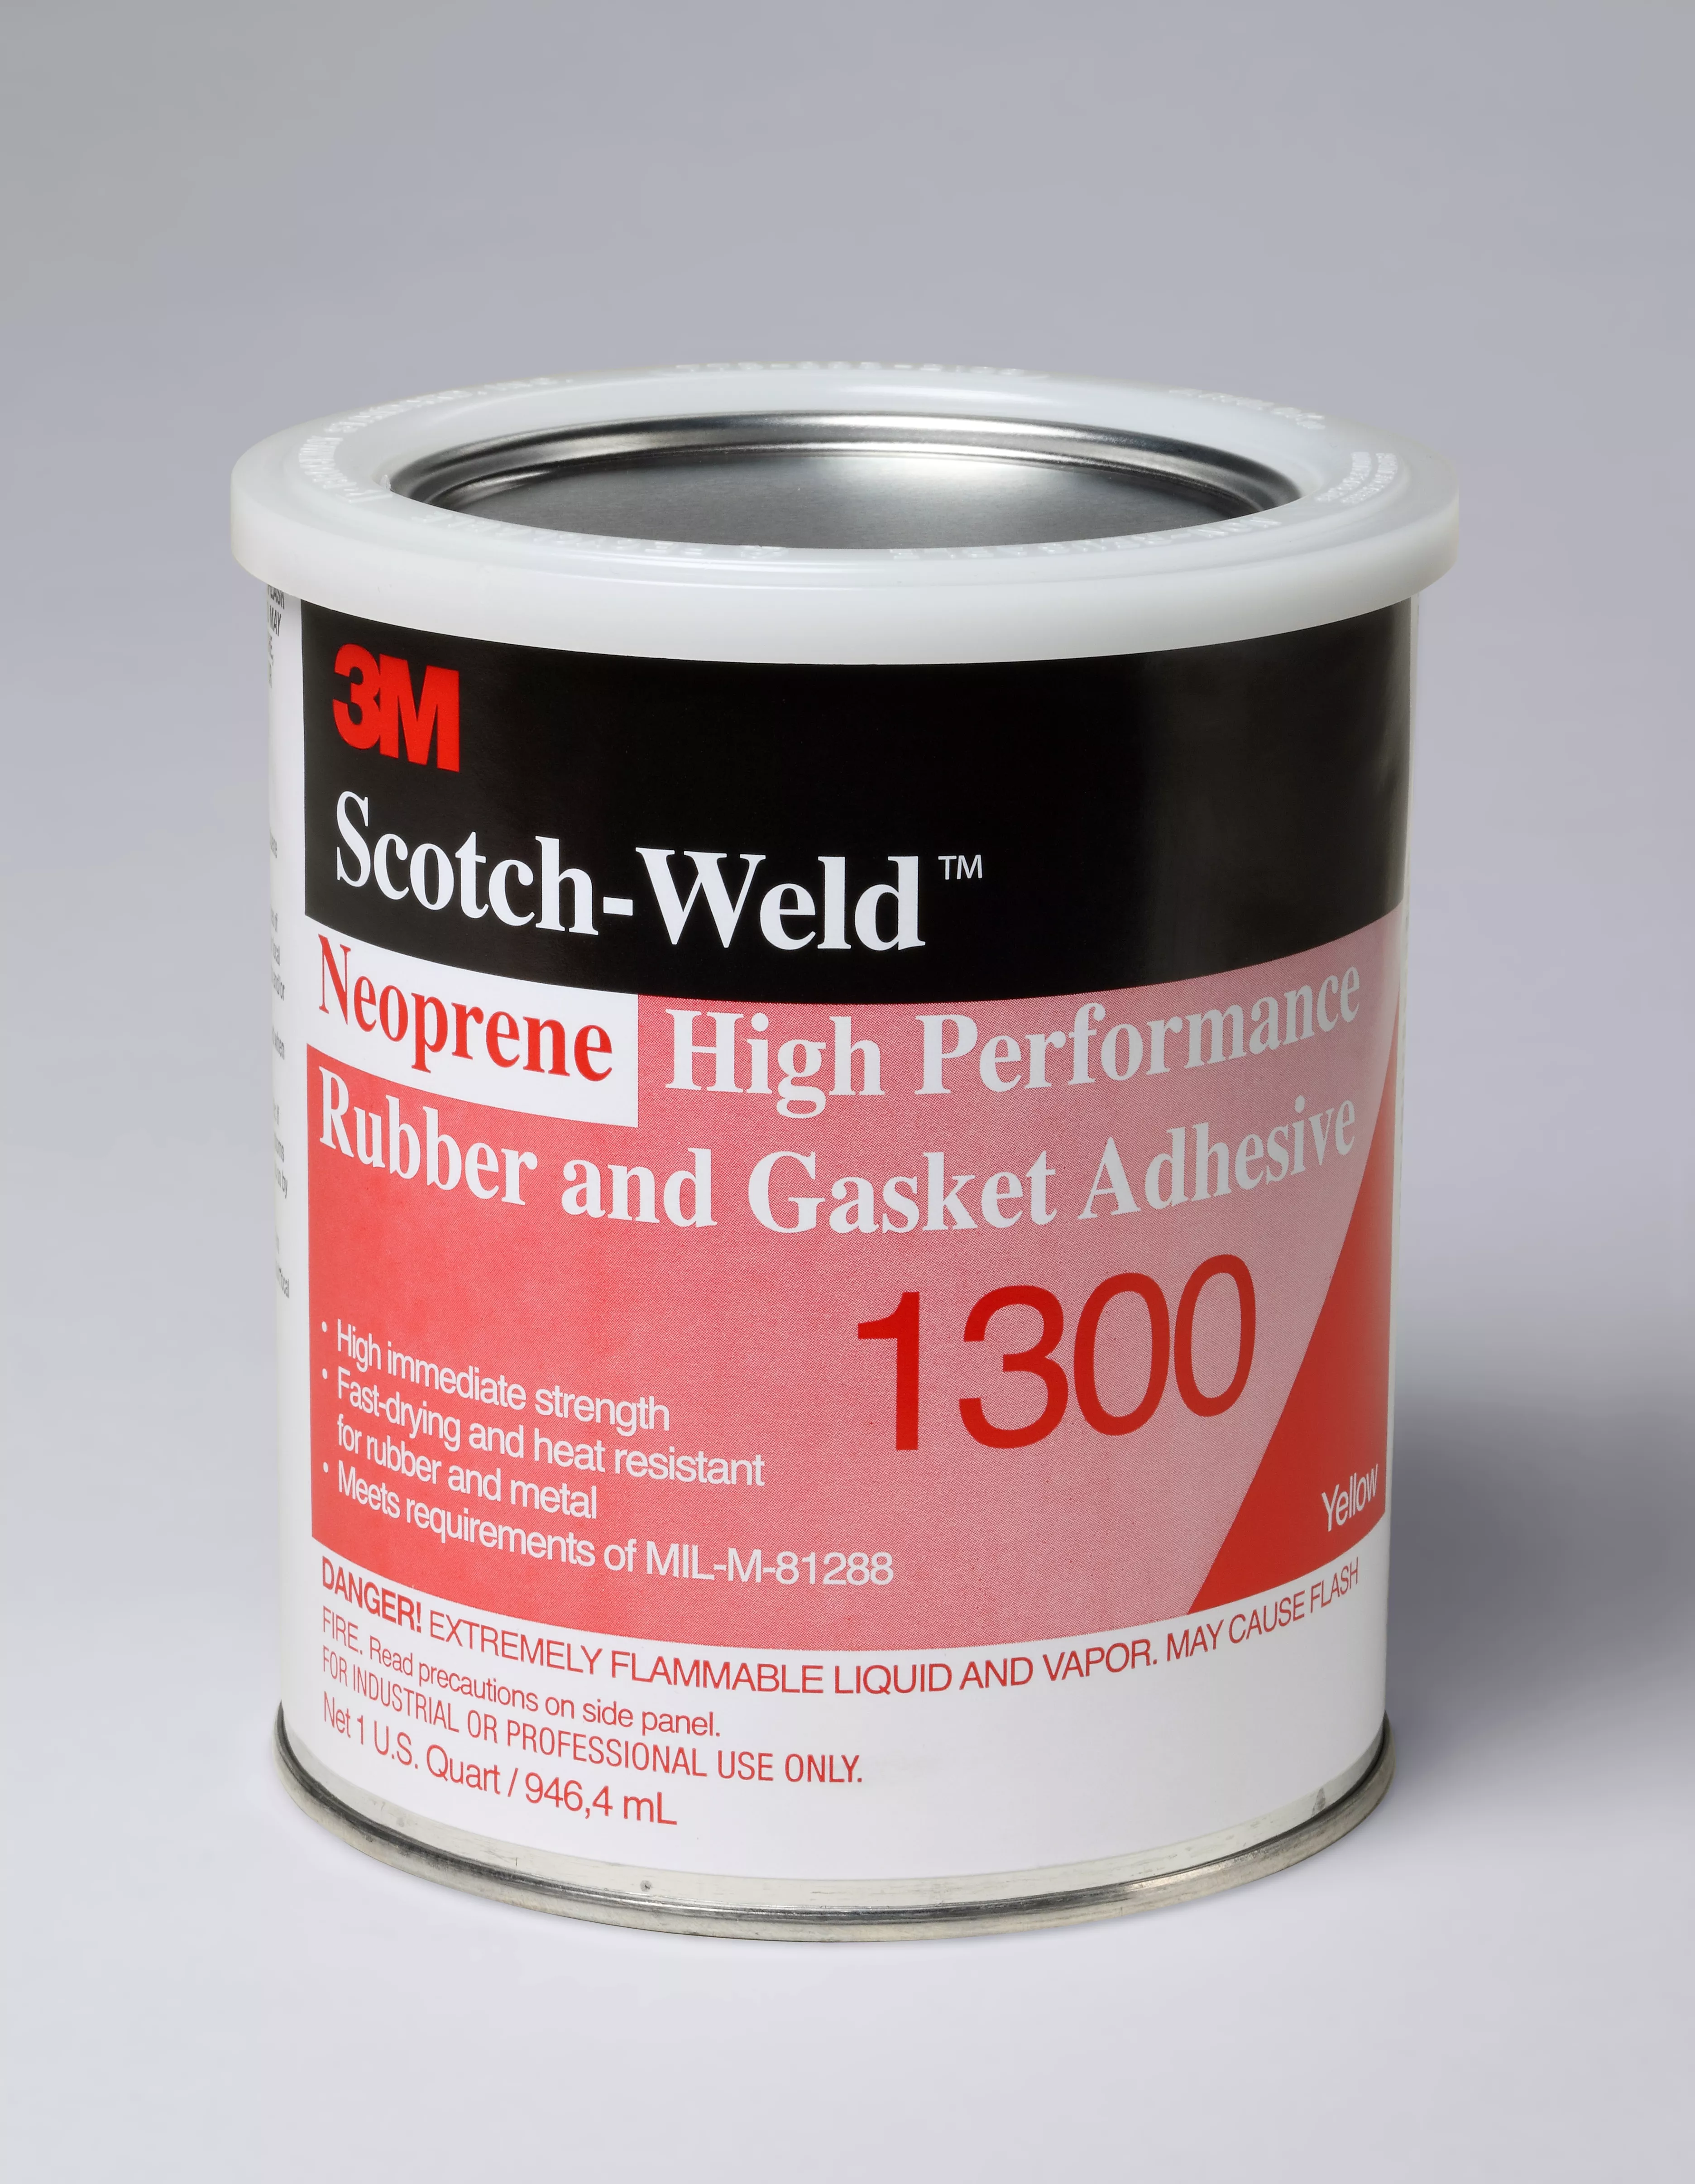 SKU 7100025171 | 3M™ Neoprene High Performance Rubber and Gasket Adhesive 1300